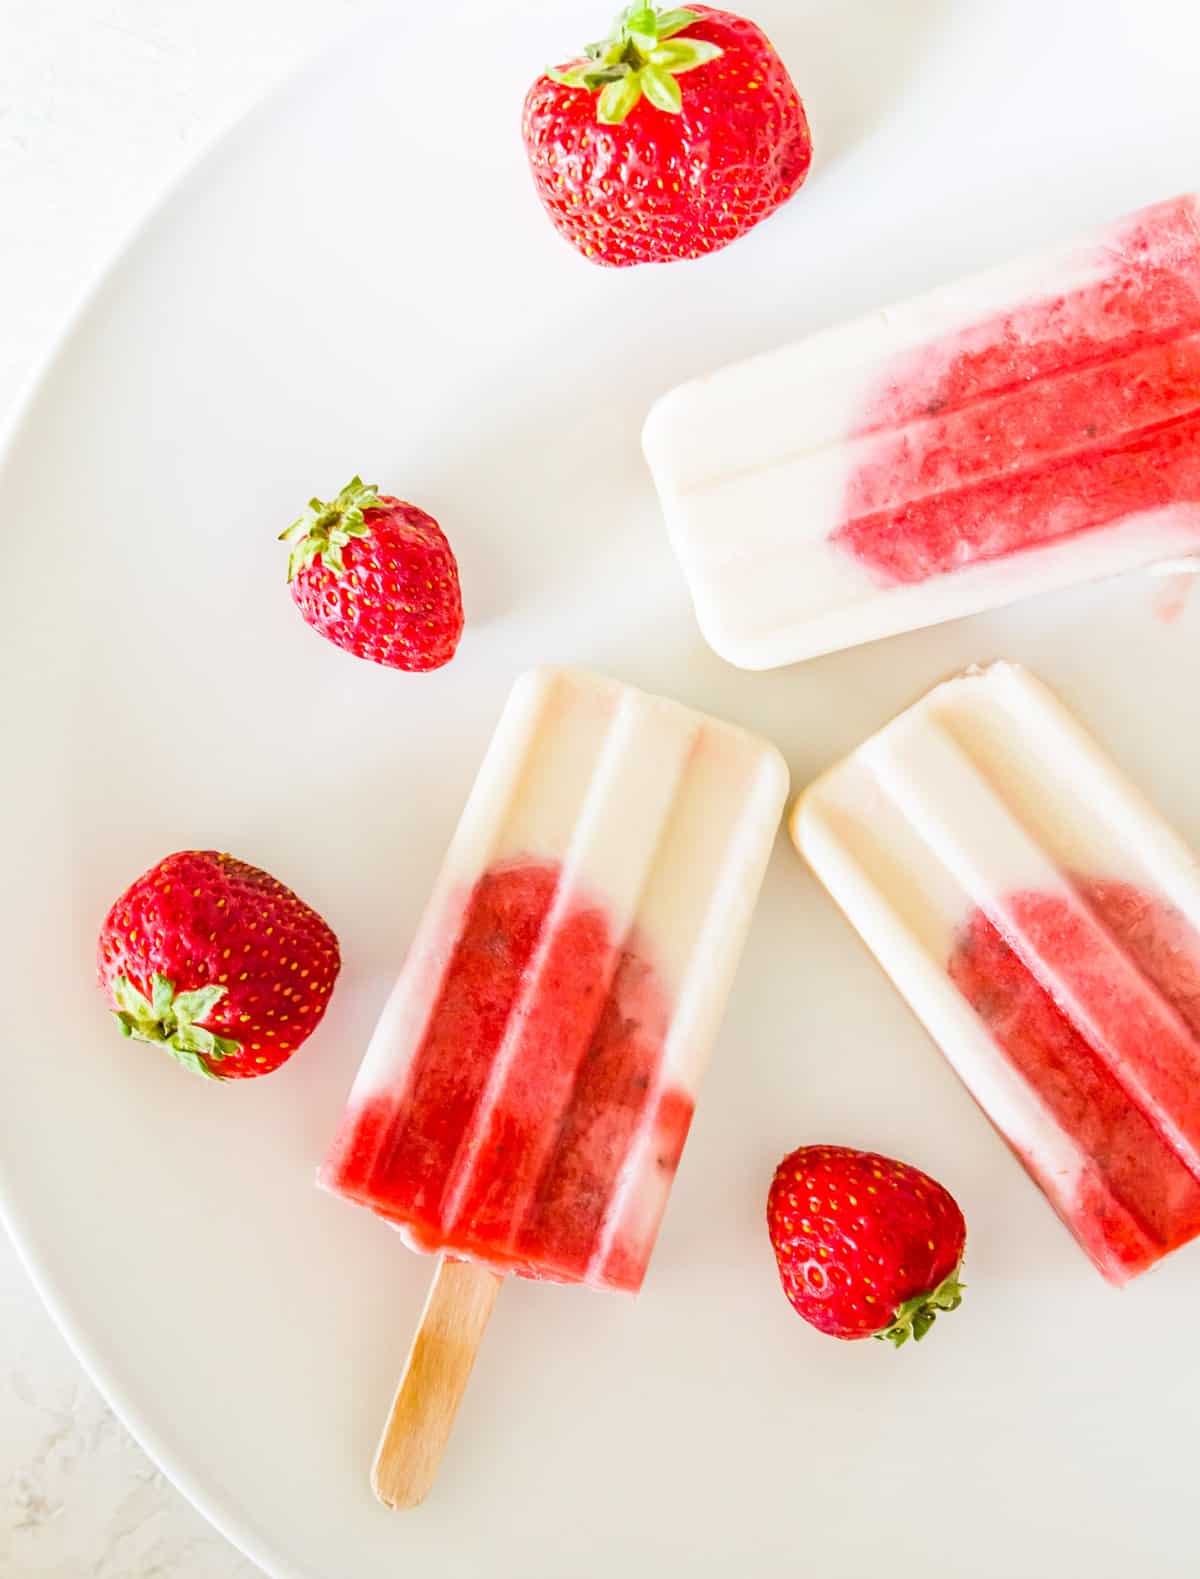 Three strawberry vanilla popsicles on plate with fresh strawberries around them.